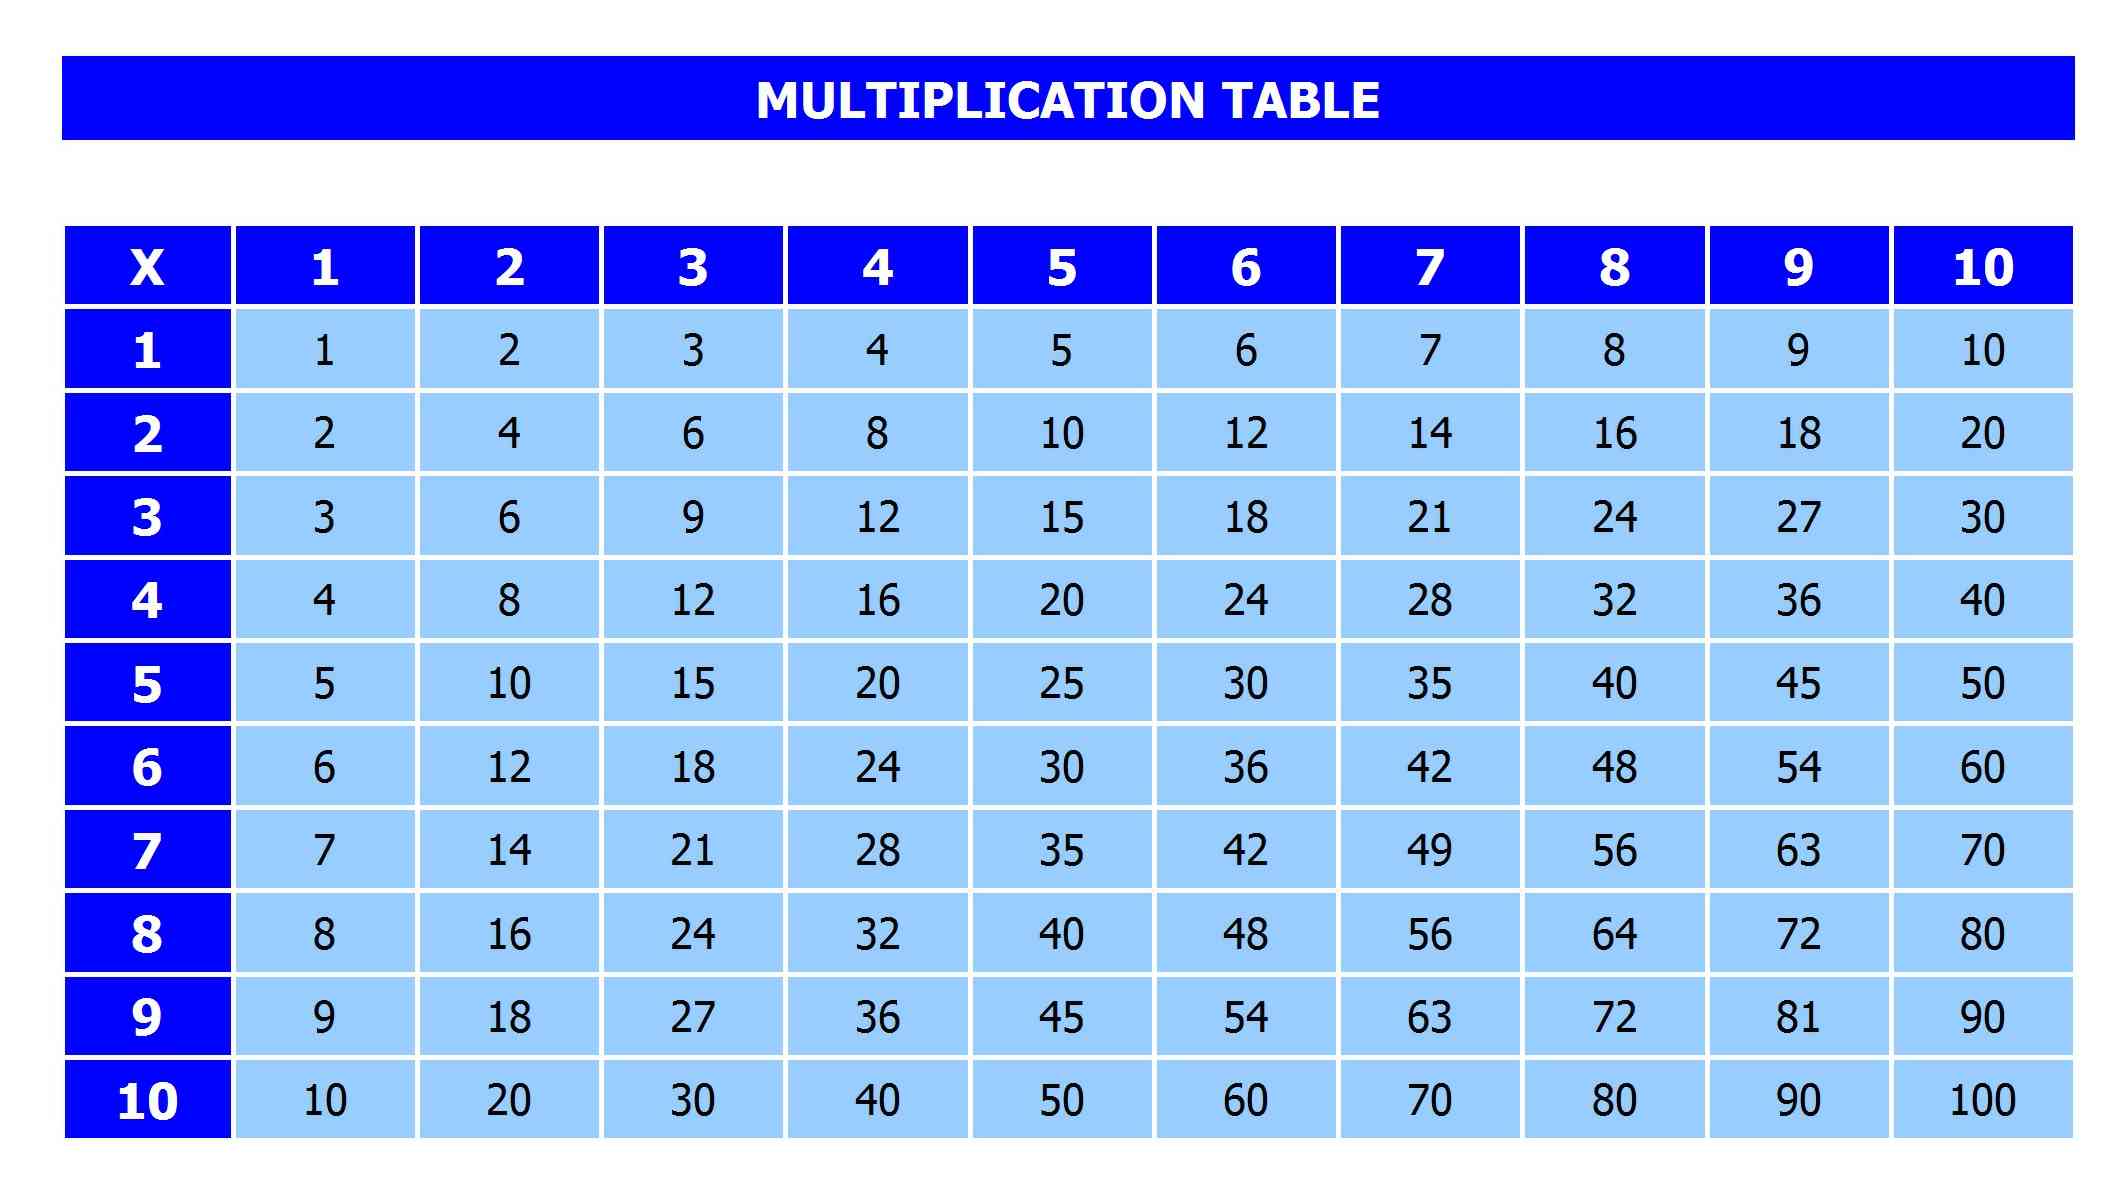 multiplication-table-officetemplates-net